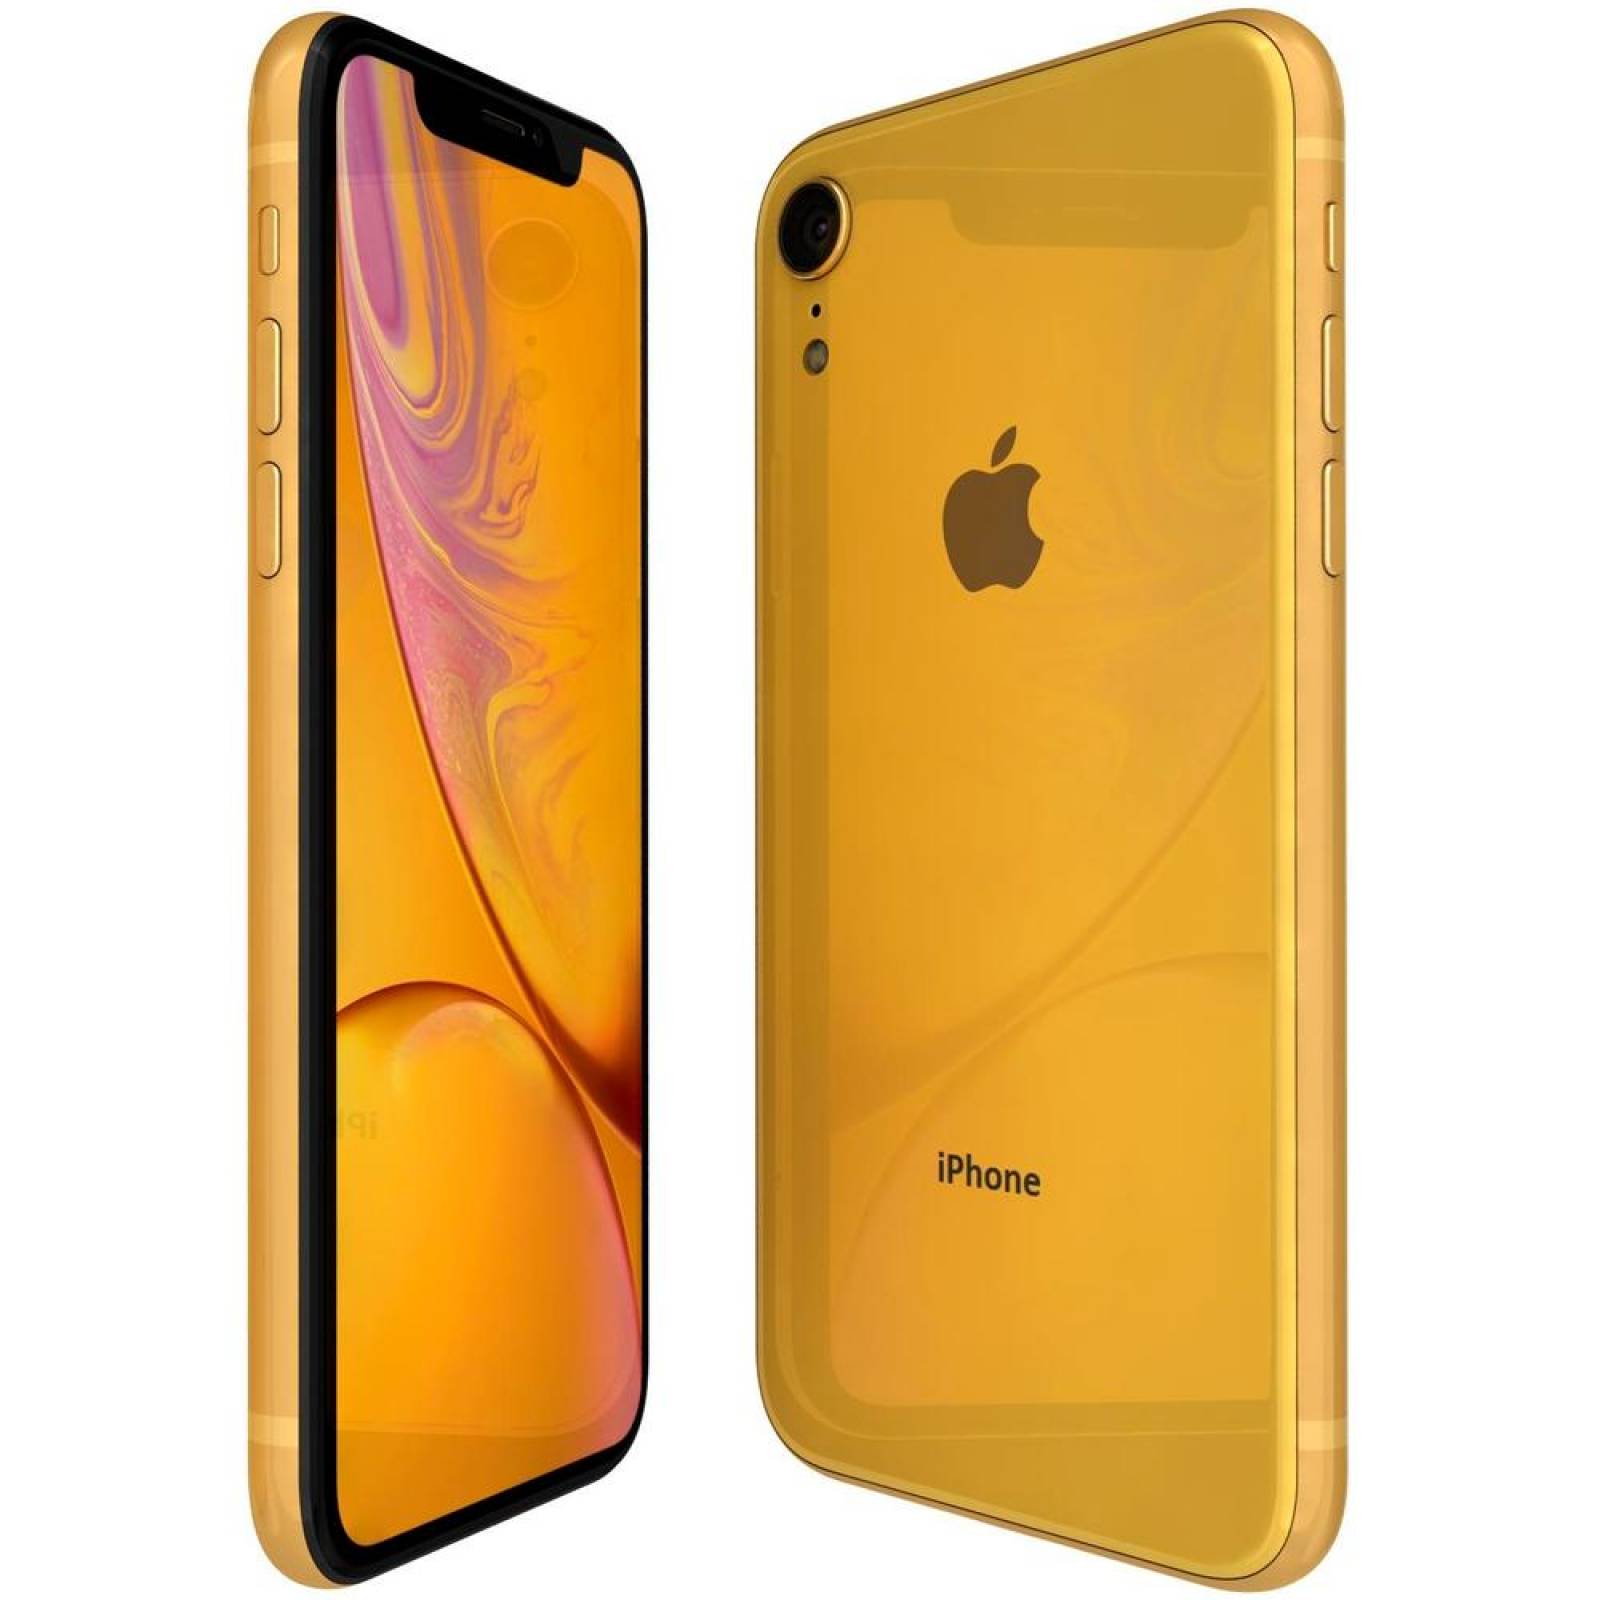 Celular APPLE iPhone XR 3GB 64GB Hexa Core iOS 12 Yellow MT082J/A Open Box 